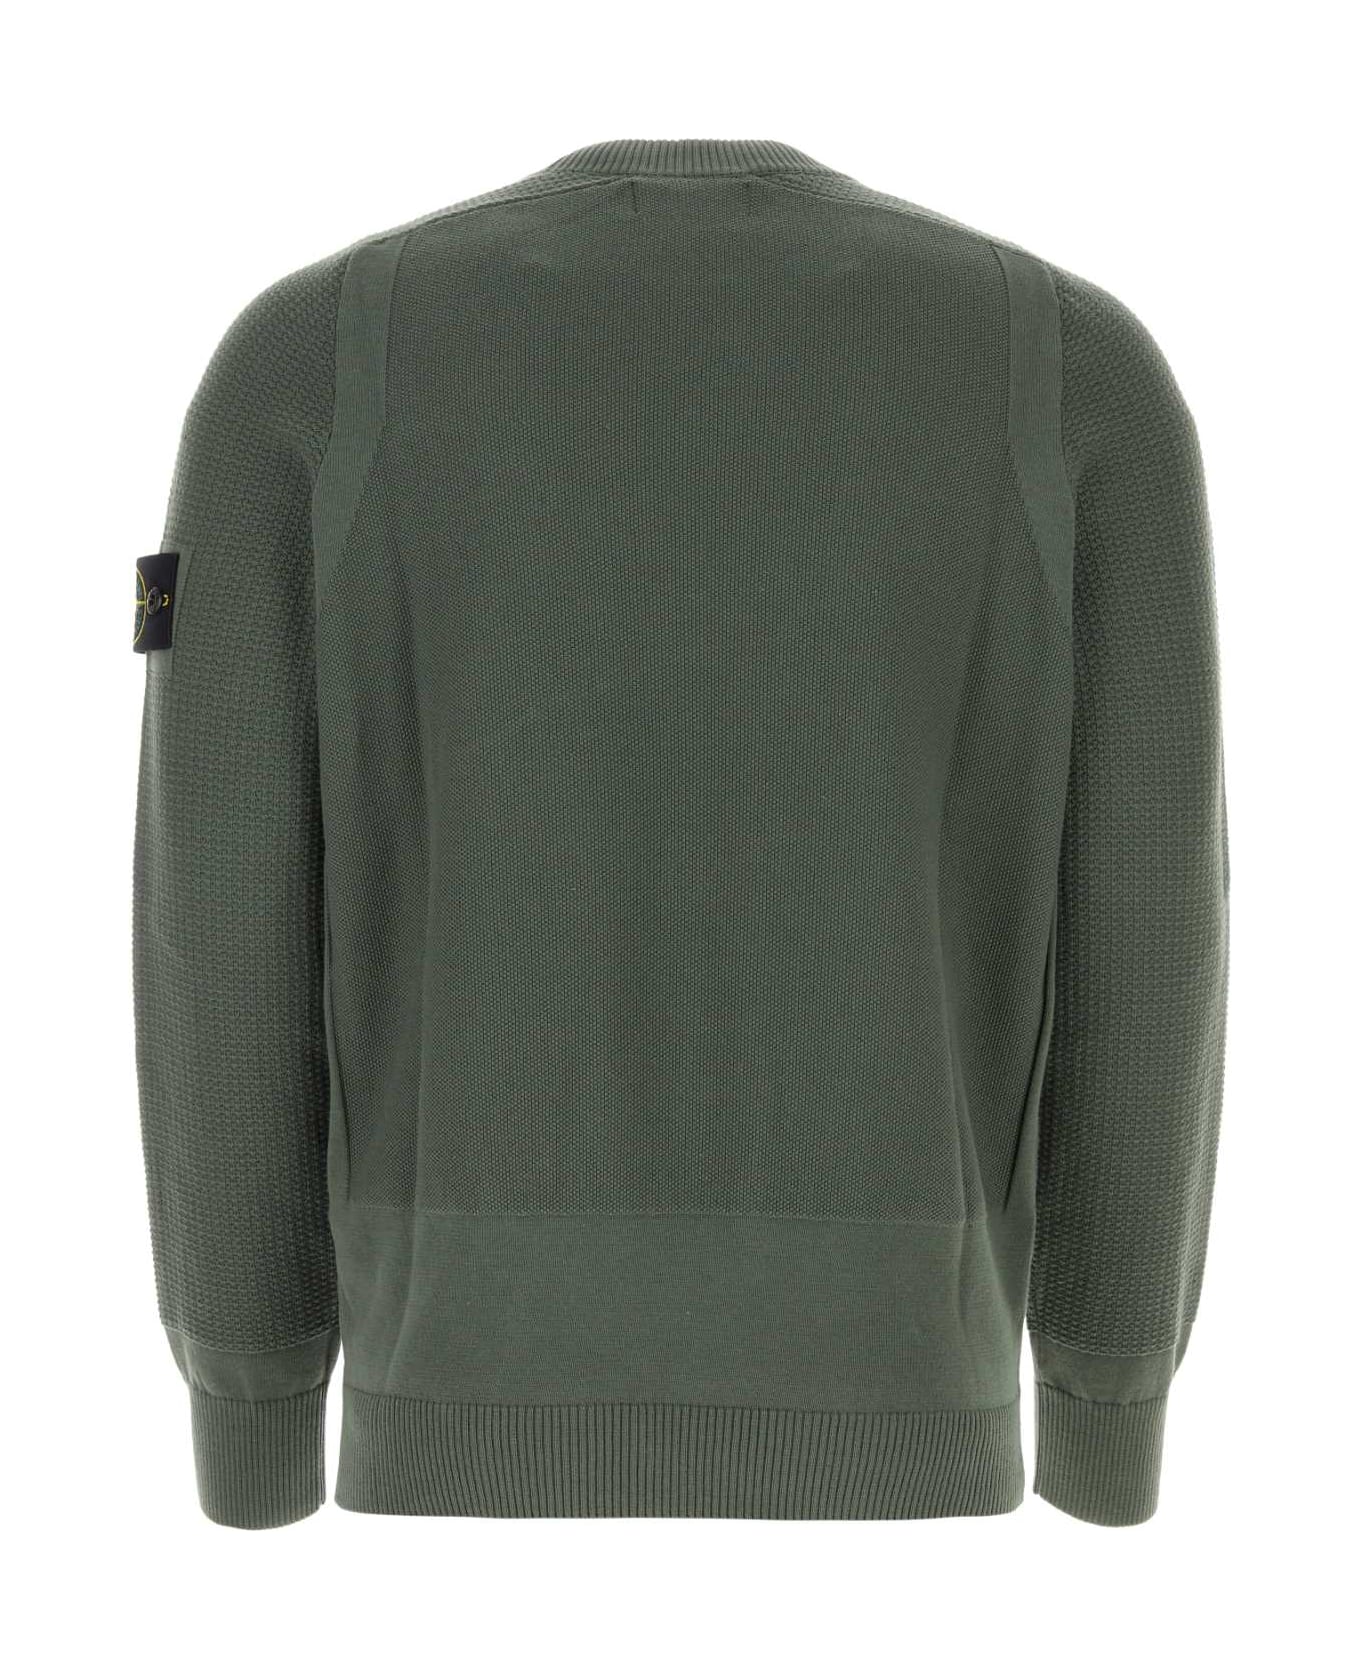 Stone Island Sage Green Cotton Sweater - MUSCHIO